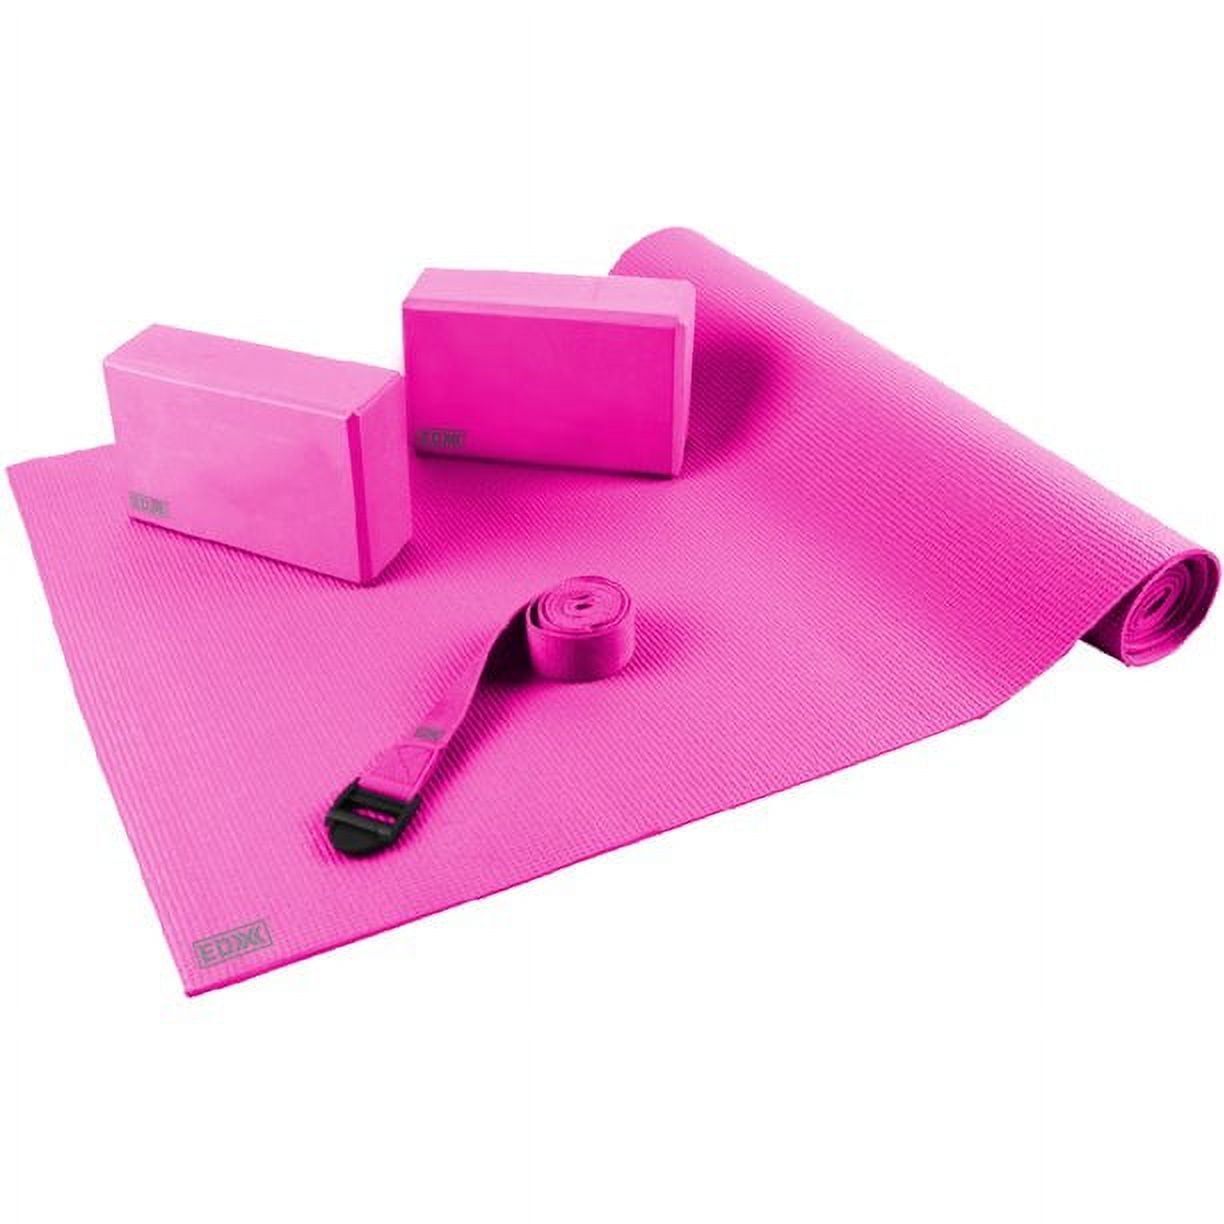 4 Piece Essential Yoga Kit - Pink, Starter Sets -  Canada